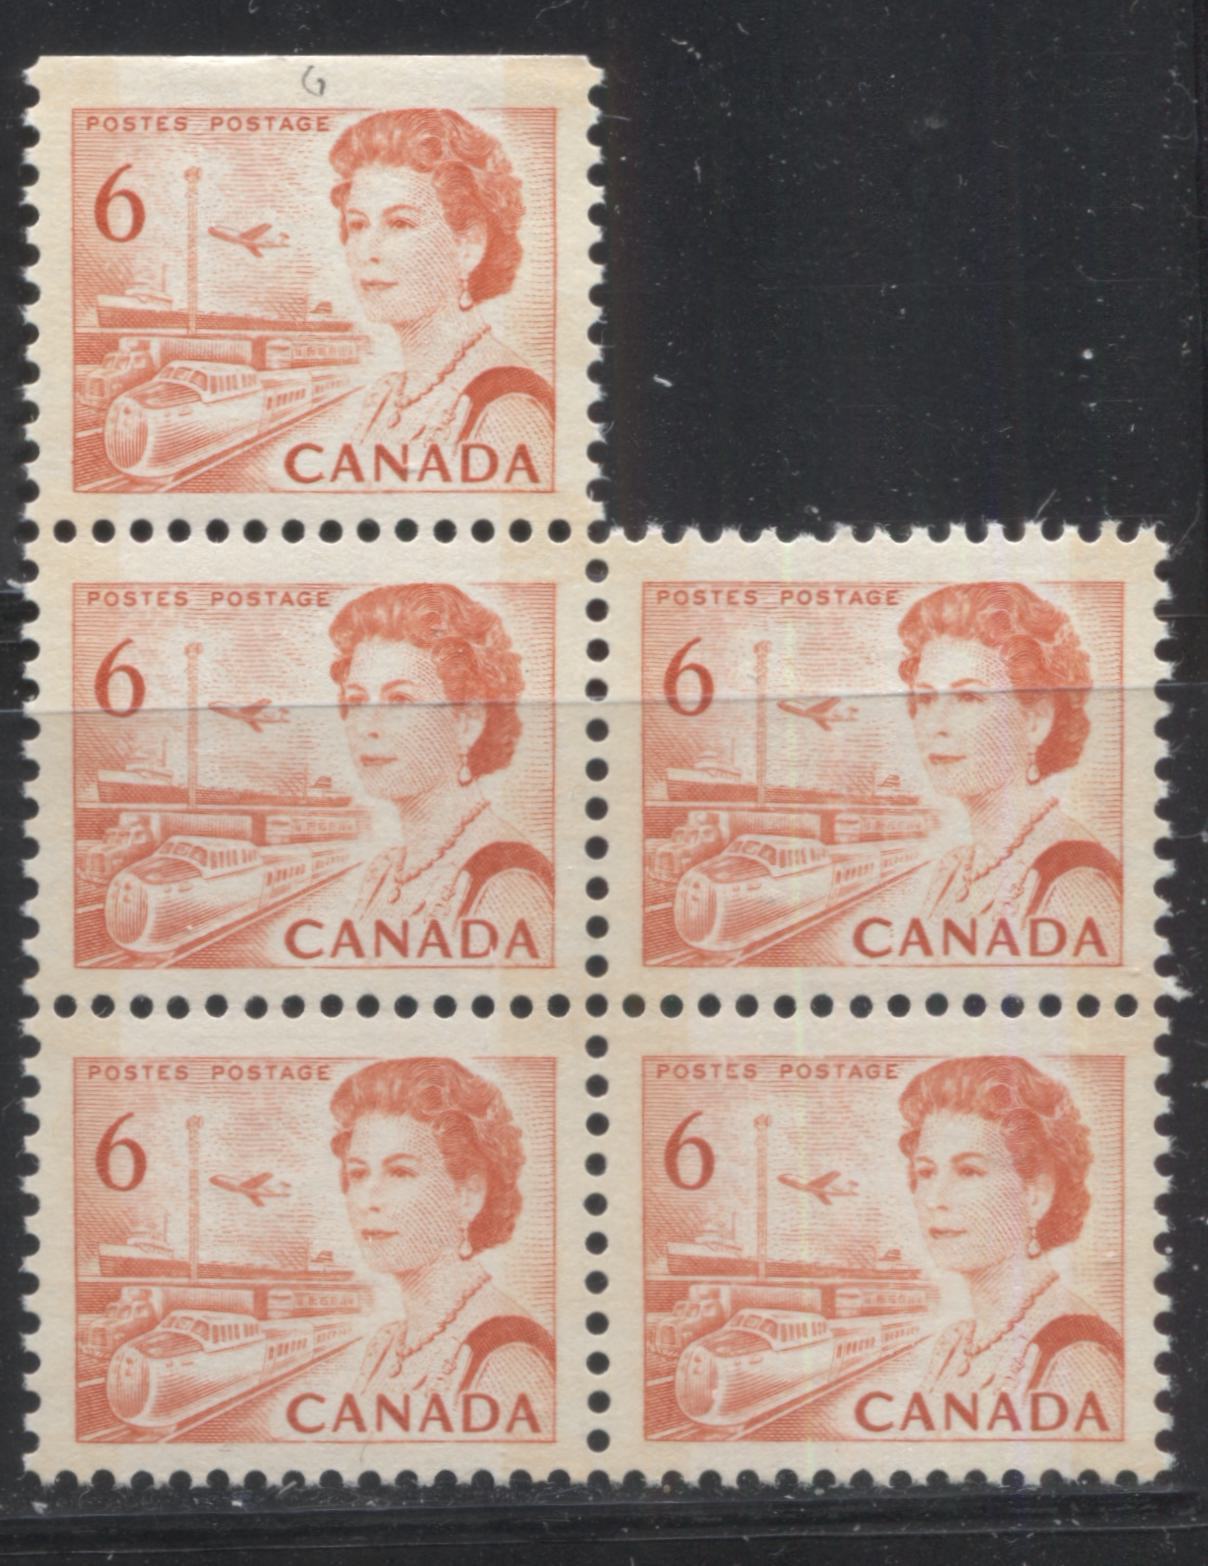 Lot 205 Canada #459bpvar 6c Red Orange Transportation, 1967-1973 Centennial Definitive Issue, A VFNH Irregular Top Sheet Block of 5, Winnipeg Tagged, On DF Paper, Perf. 12.5 x 12, Showing "Speck in Margin Below & Left of C" on LR Stamp